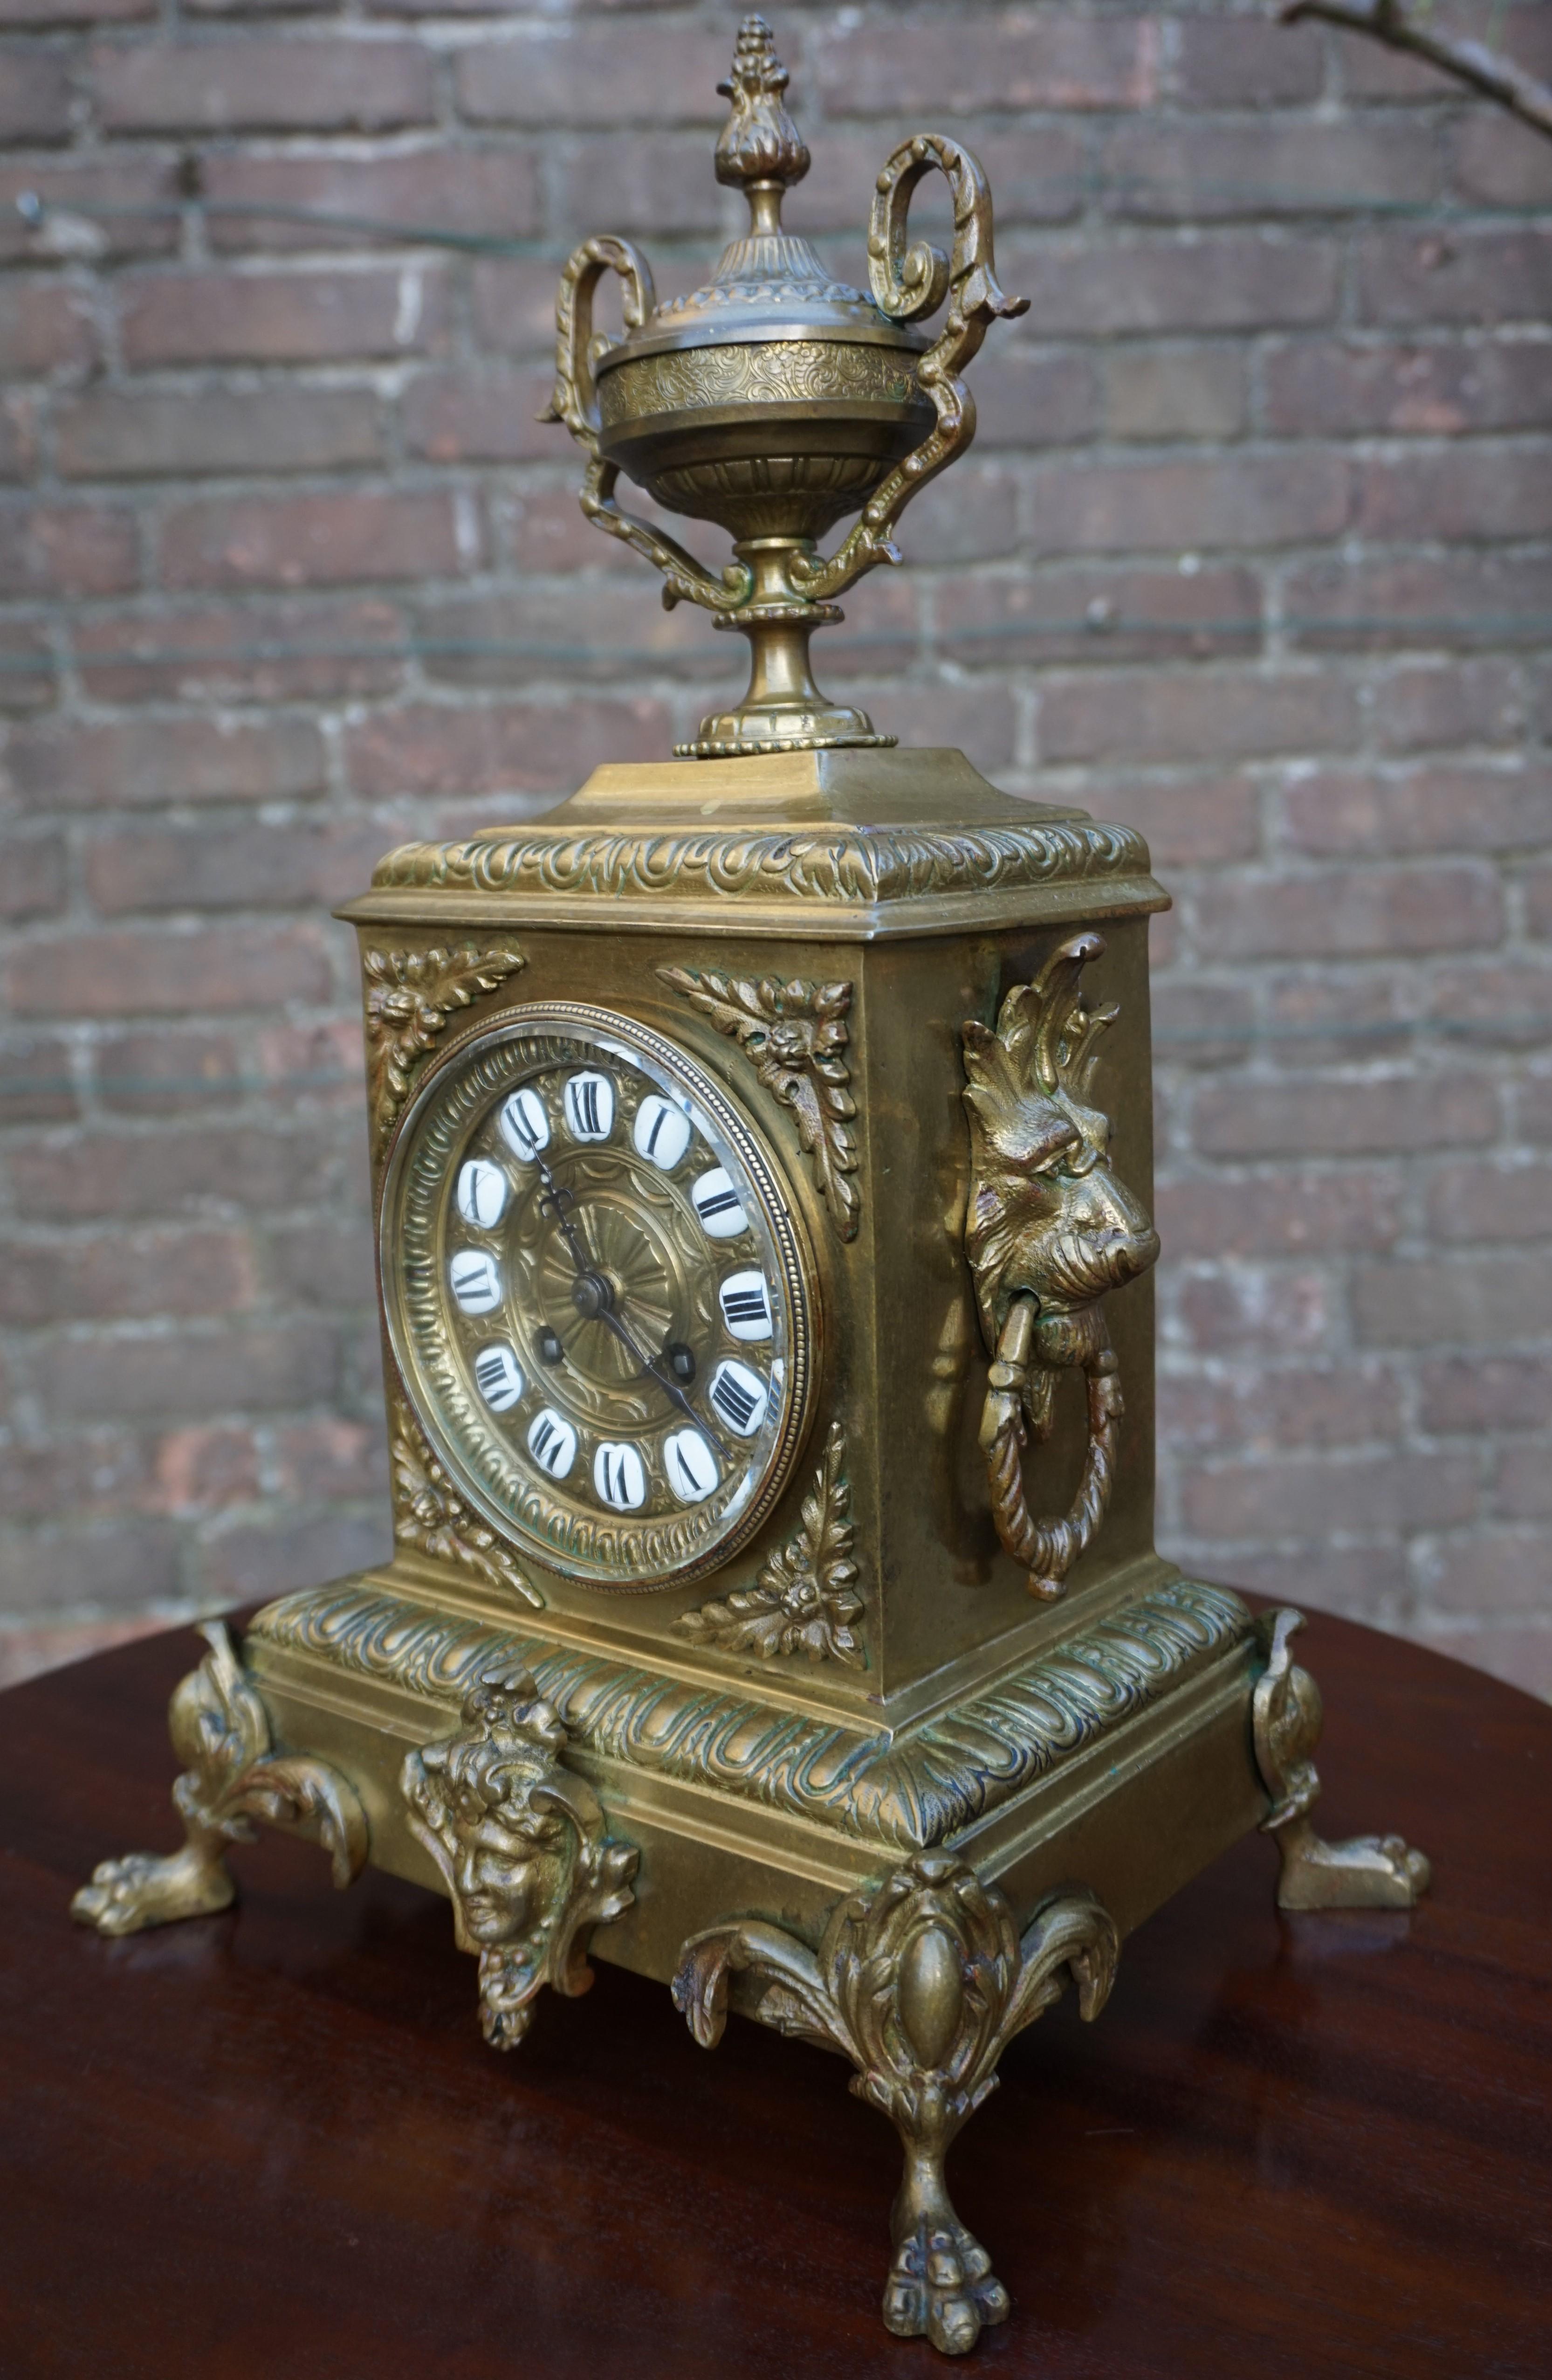 Neoclassical Revival Antique Bronze and Brass Mantel Clock, Enameled Roman Numerals, Lion Sculptures For Sale